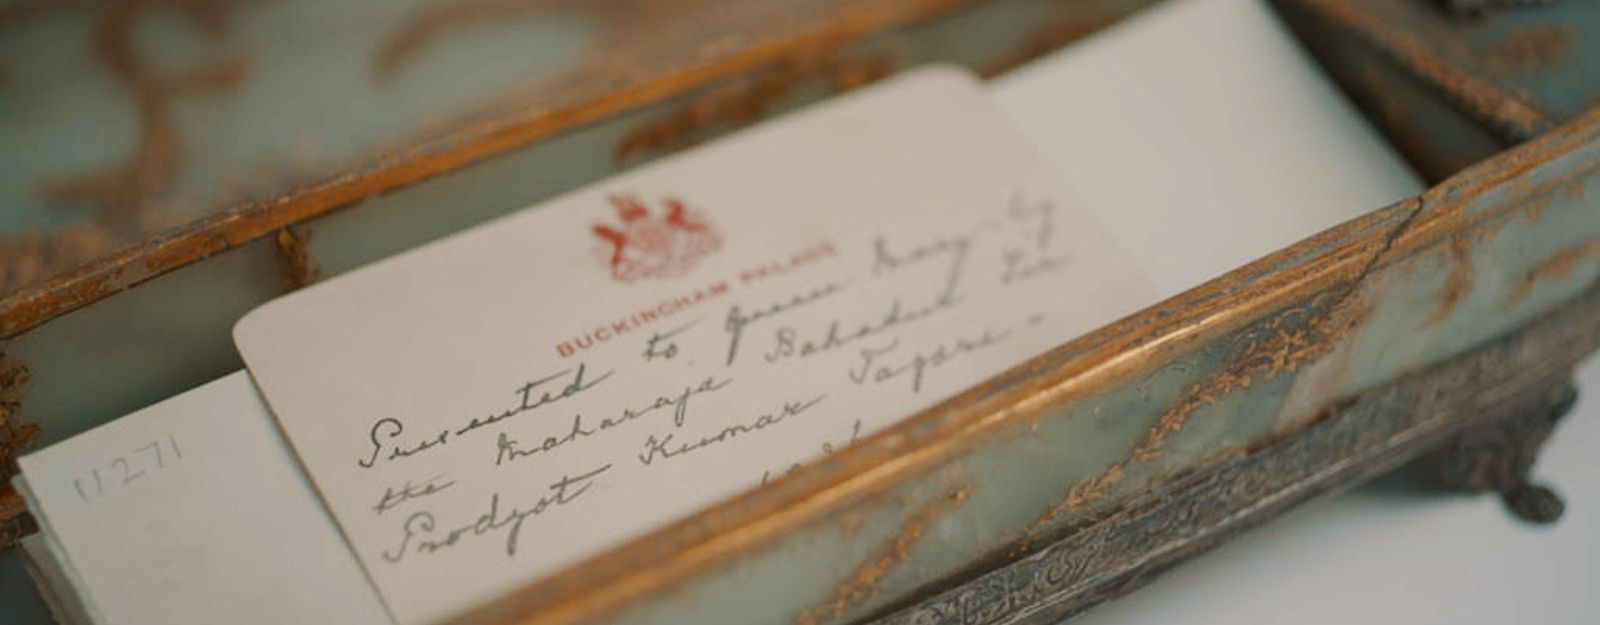 A jade box with a handwritten letter inside